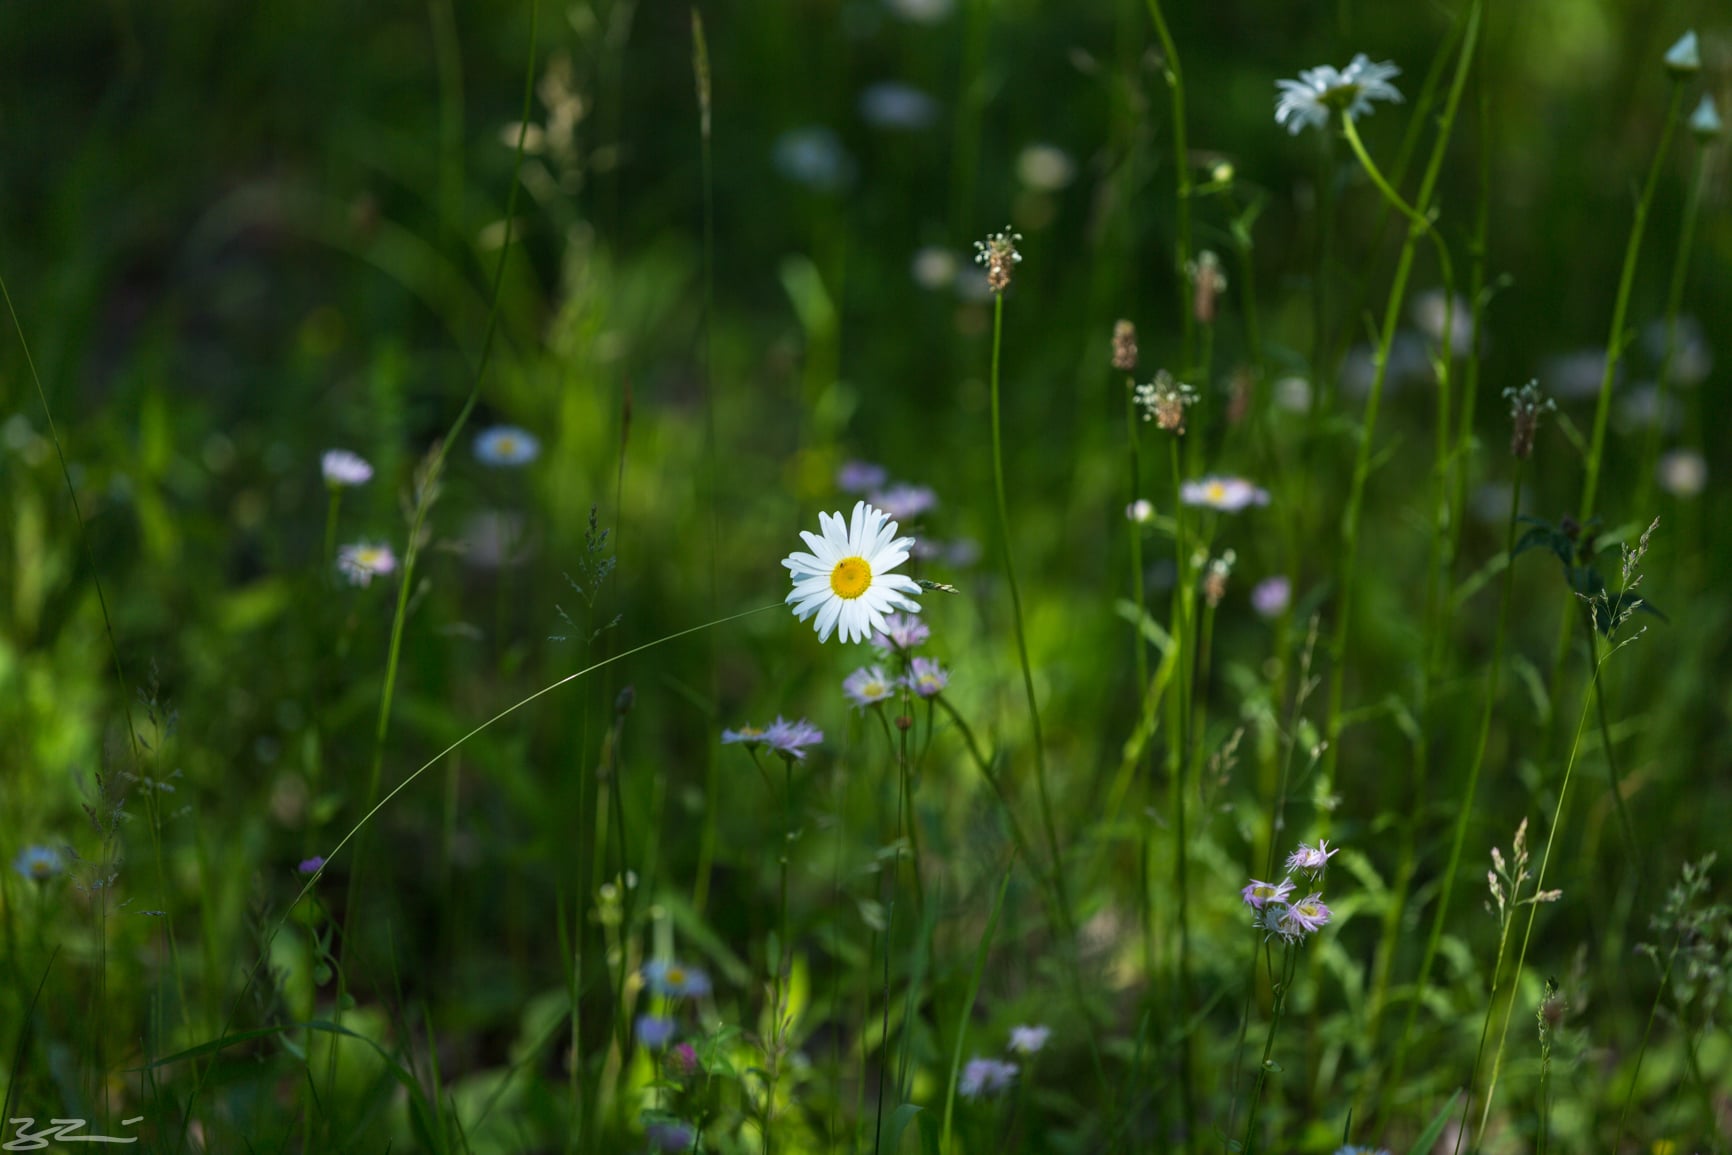 Catskill hiking: amazing daisy in the spring